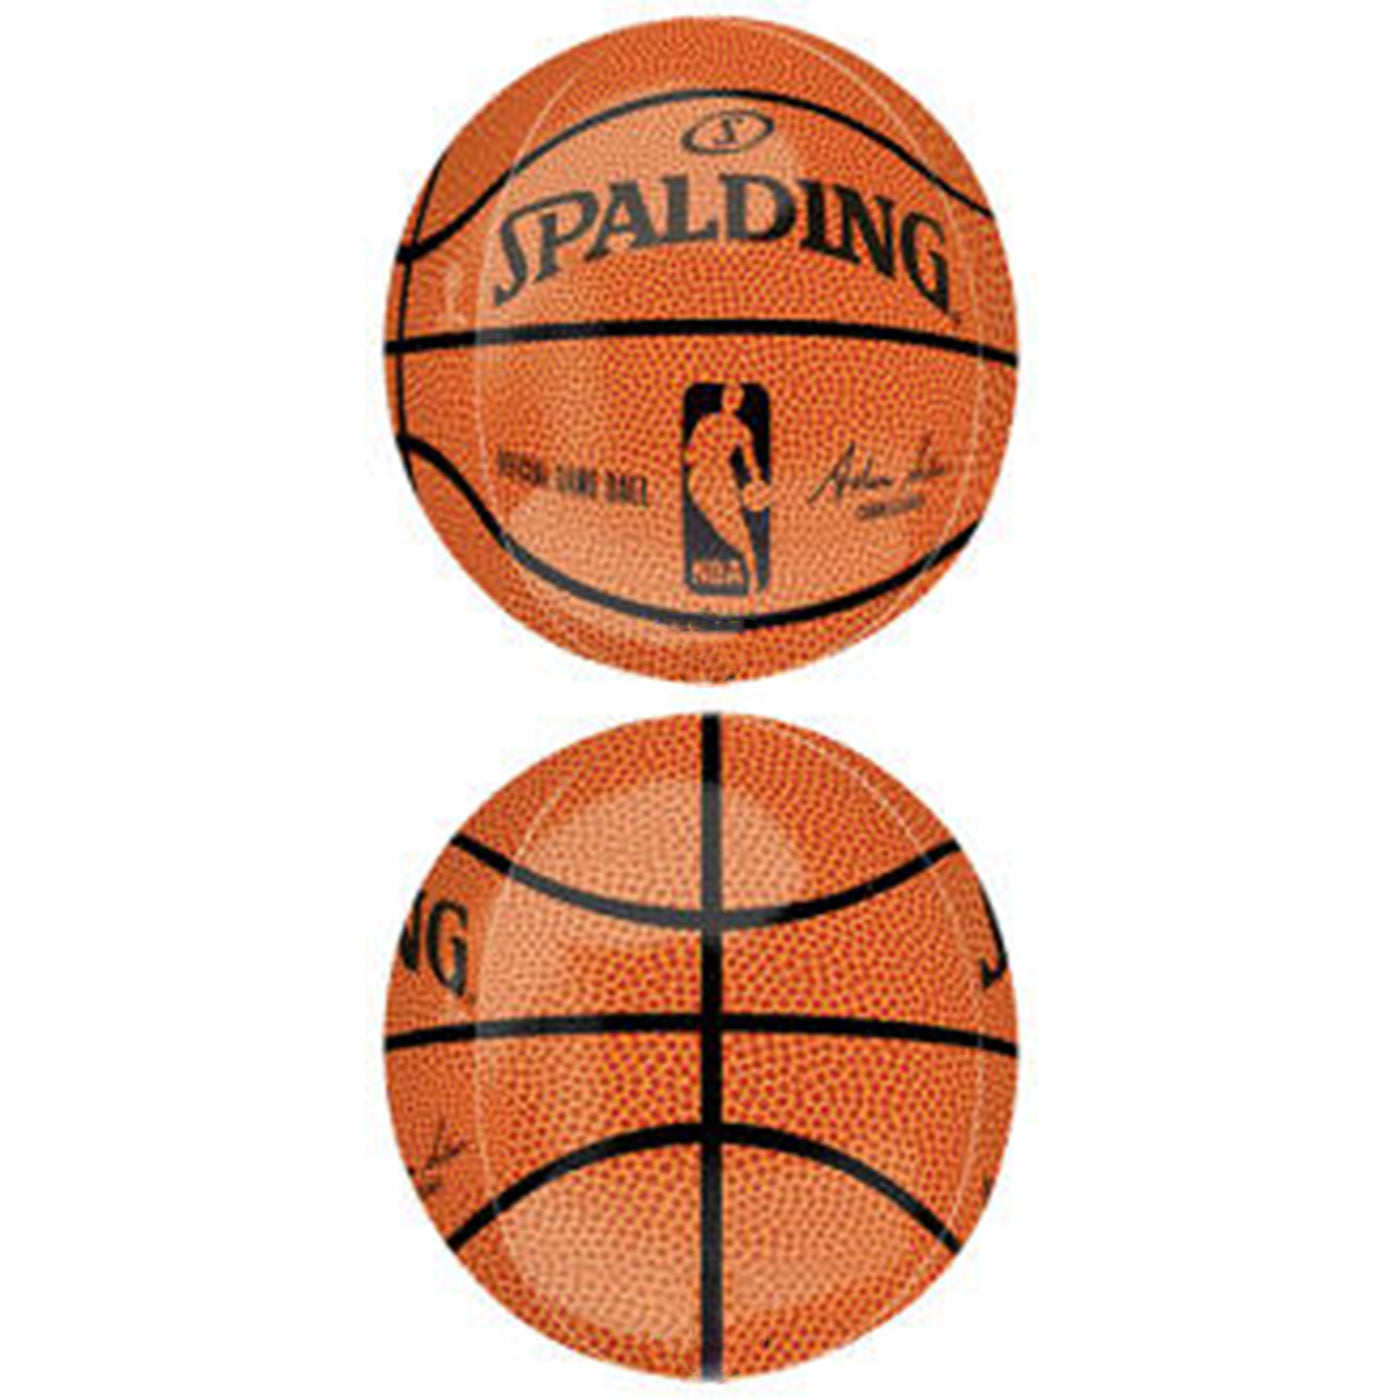 NBA Spaulding Basketball Orbz